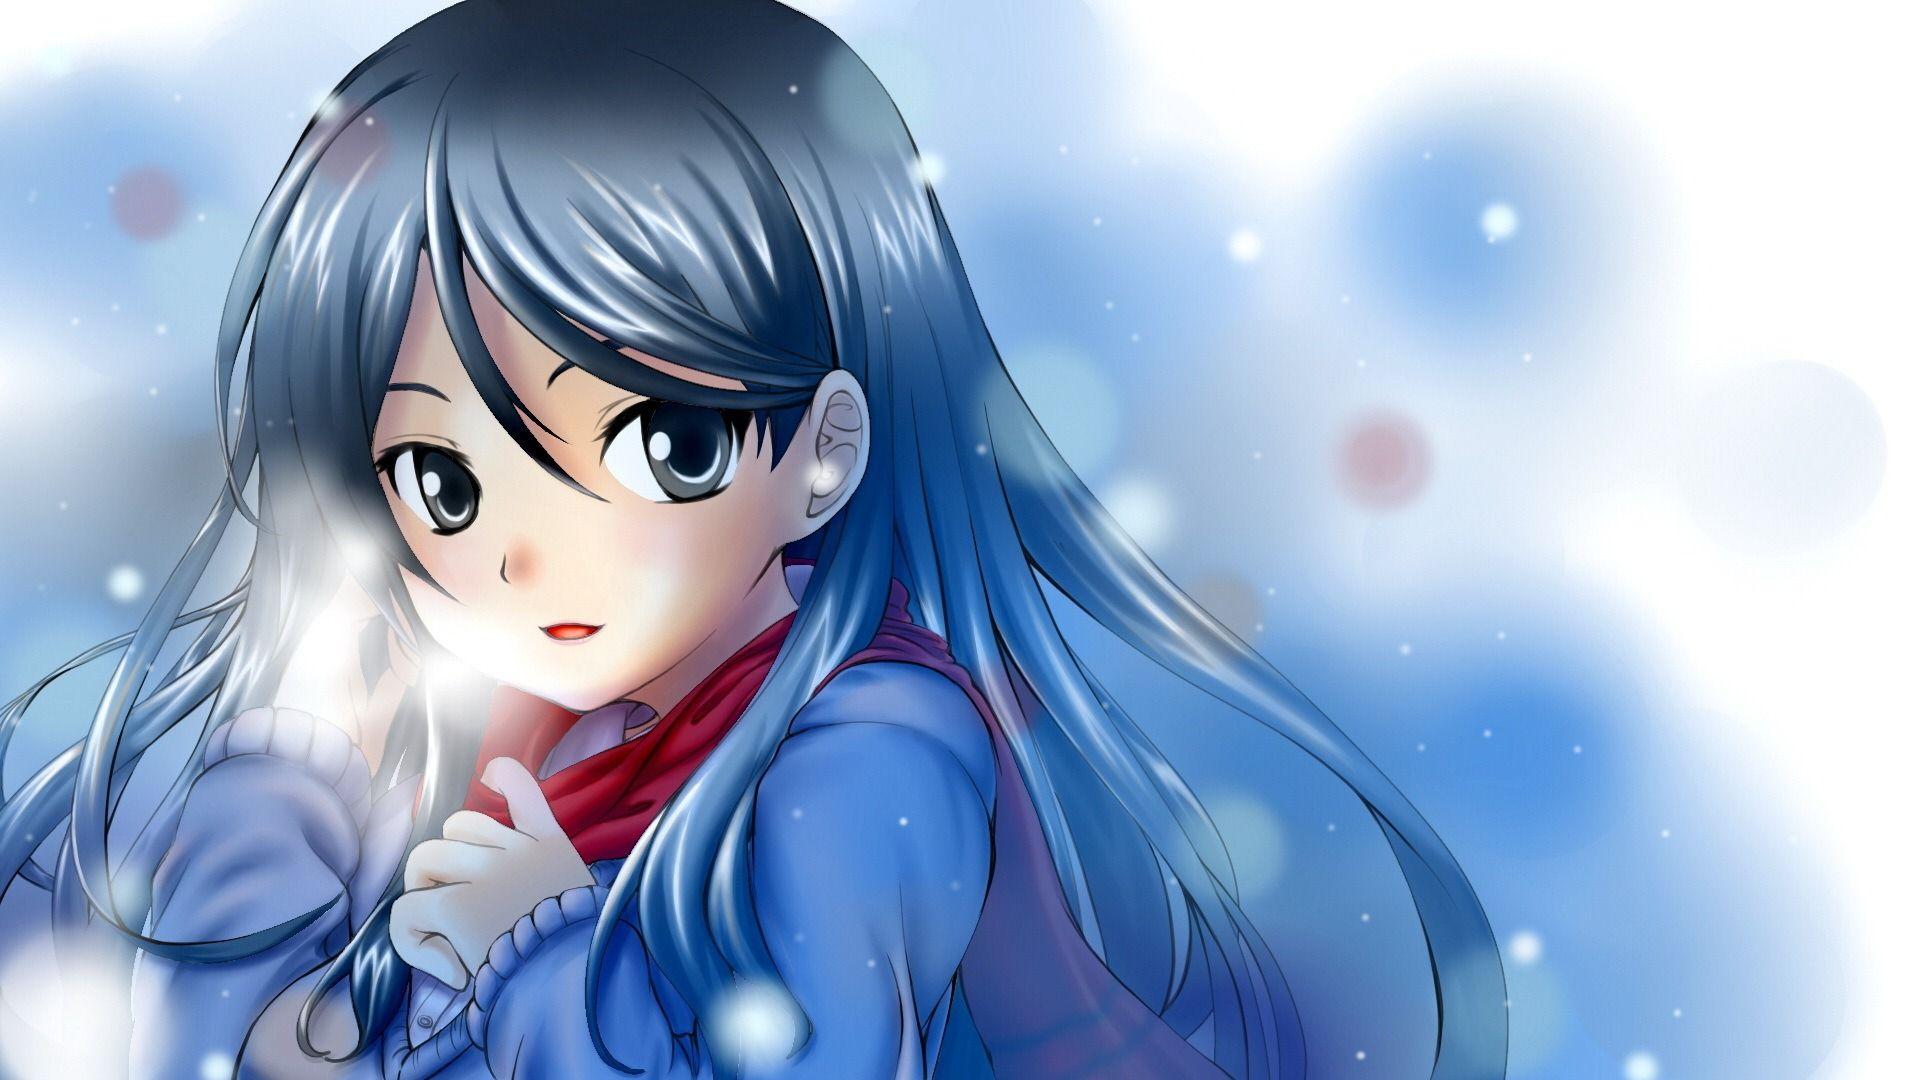 Beautiful Female Anime Wallpapers Top Free Beautiful Female Anime Backgrounds Wallpaperaccess 0665